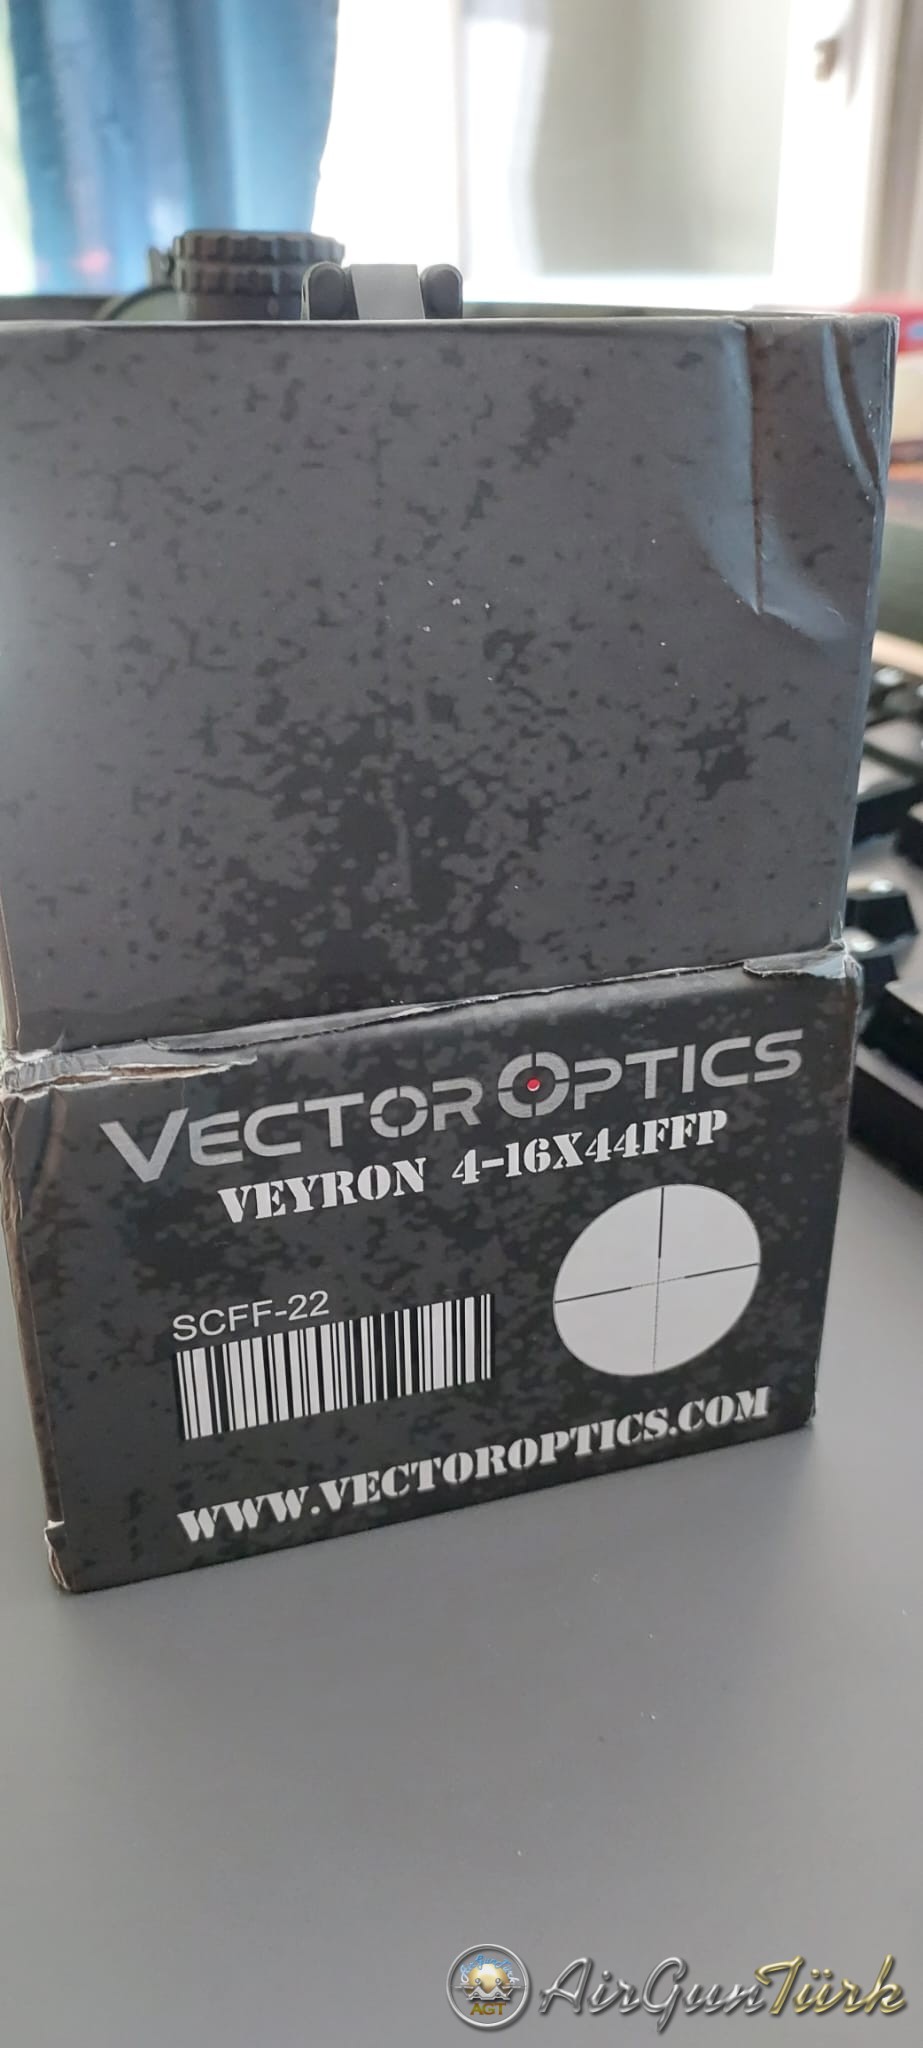 Vector Optics Veyron 4-16x44FFP Tüfek Dürbünü SCFF-22 Vector Optics